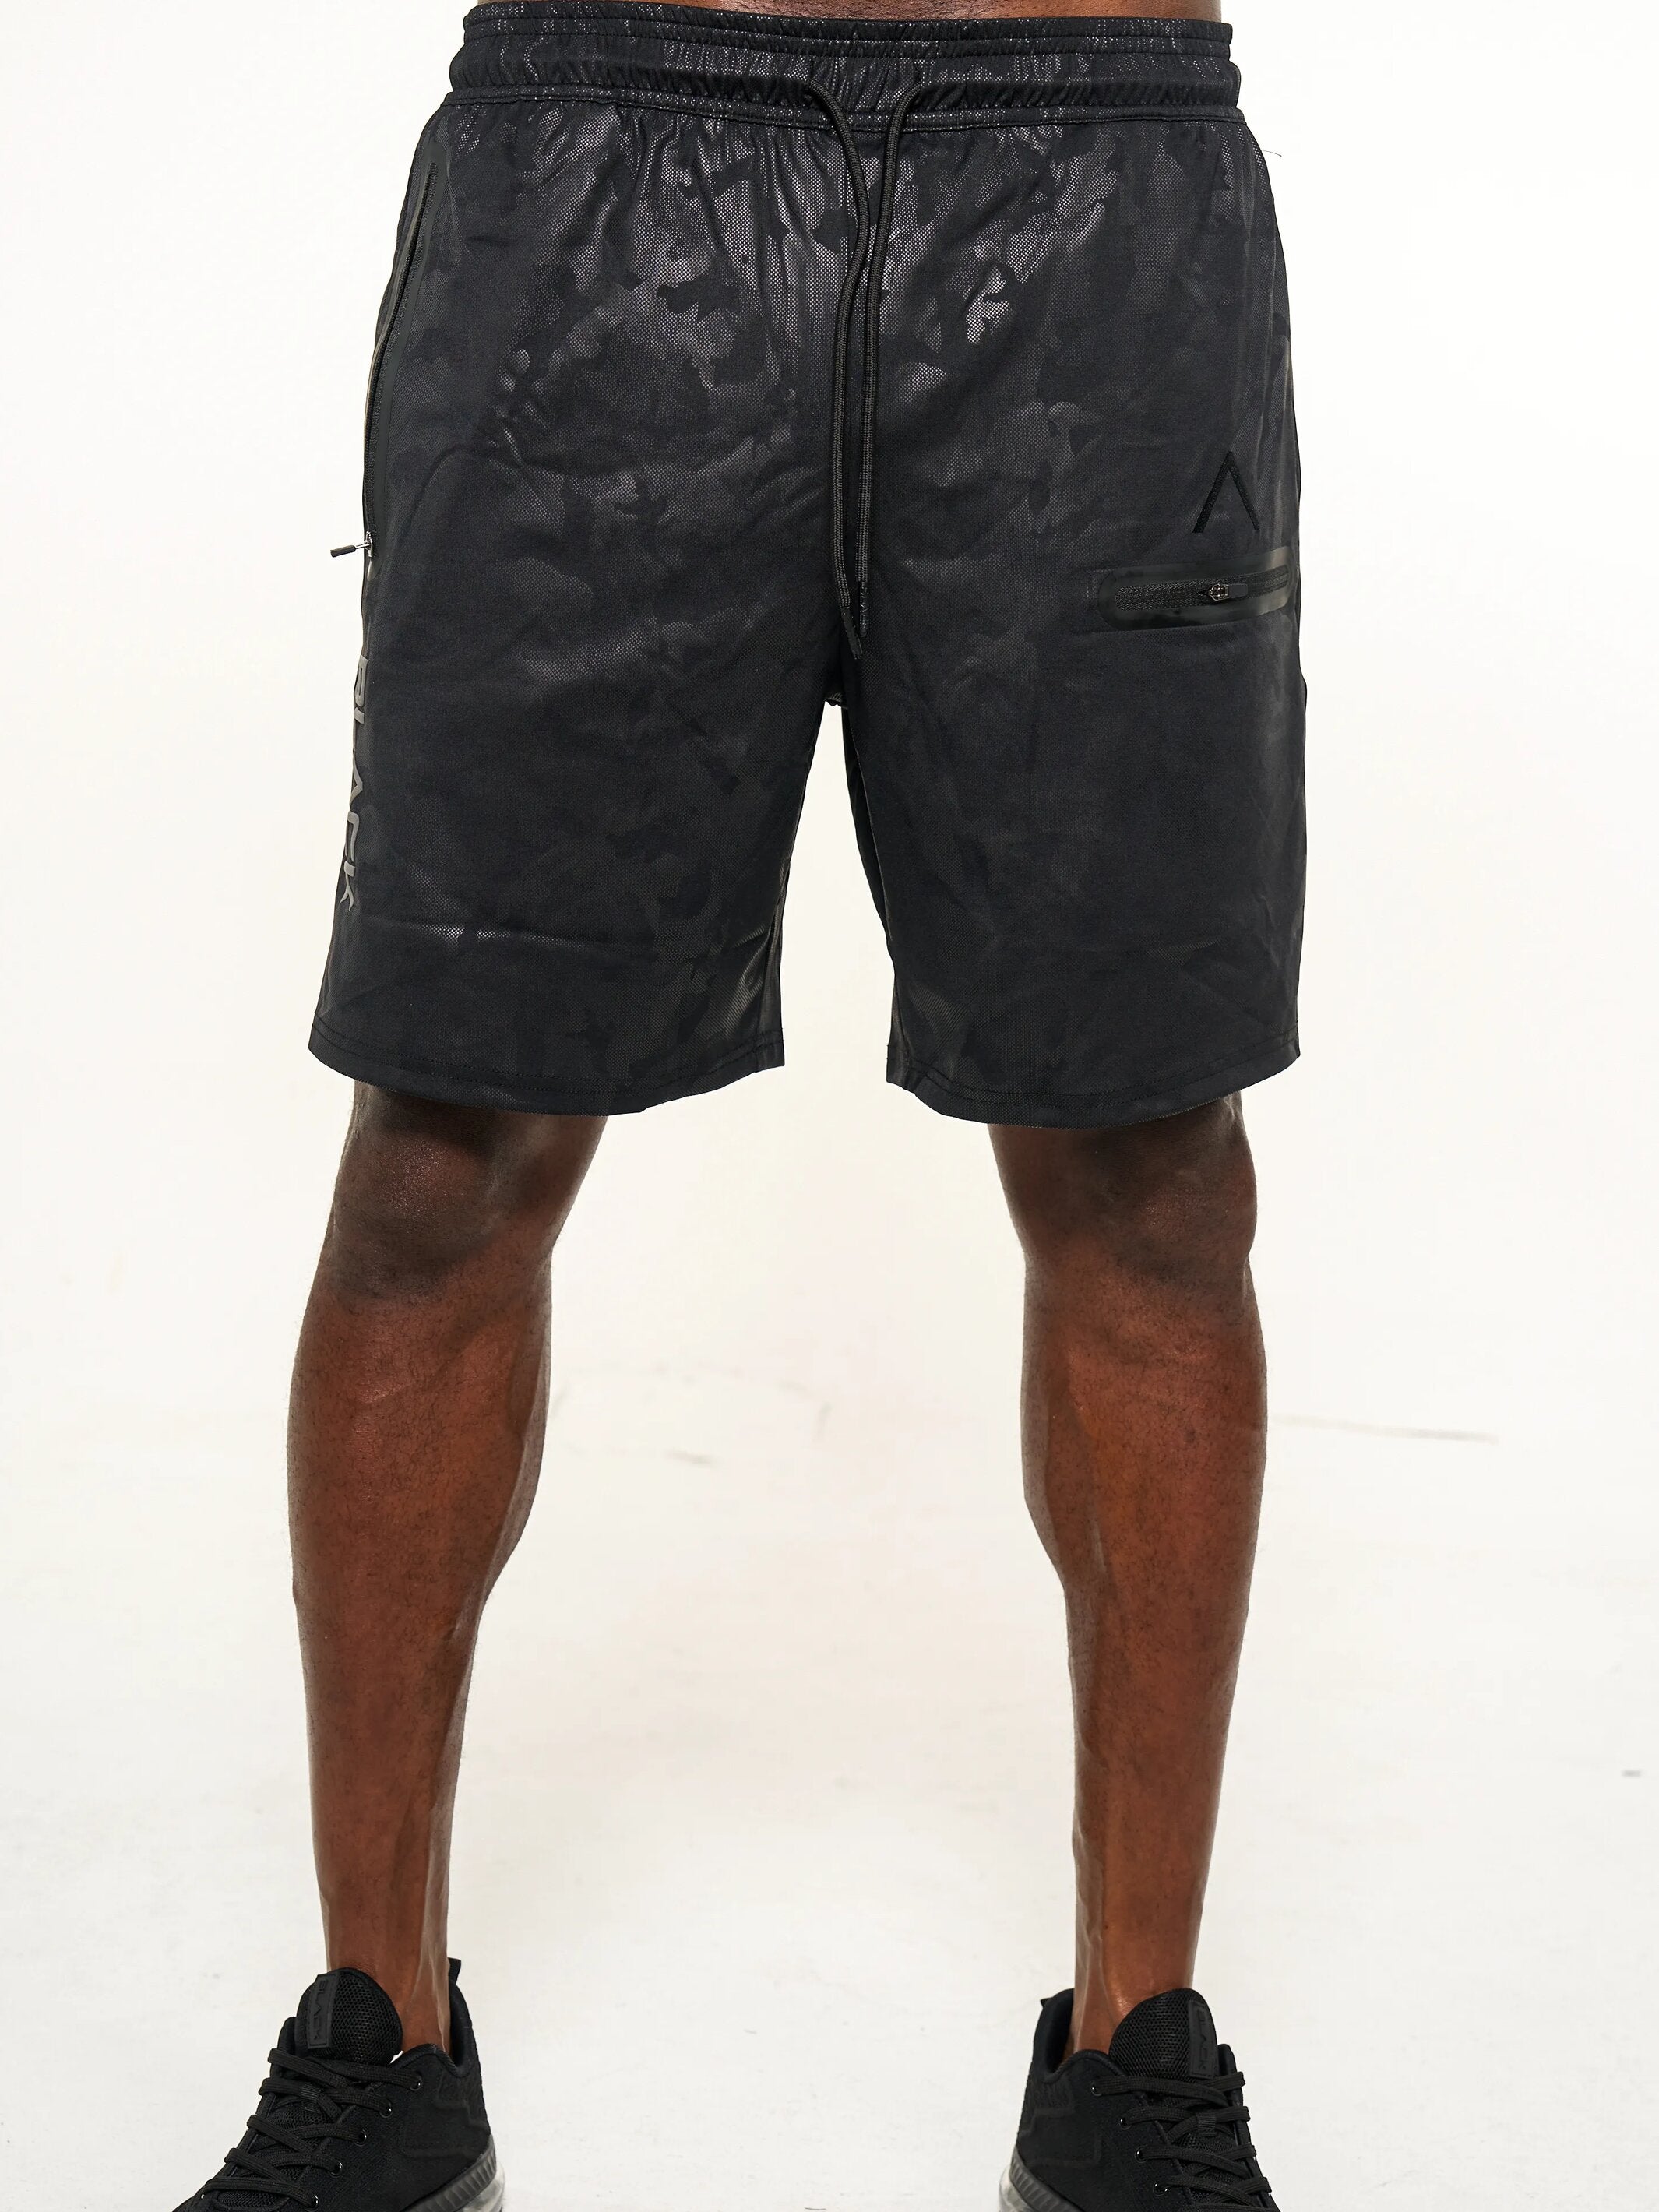 Men's Black Camo 2.0 Performance Shorts